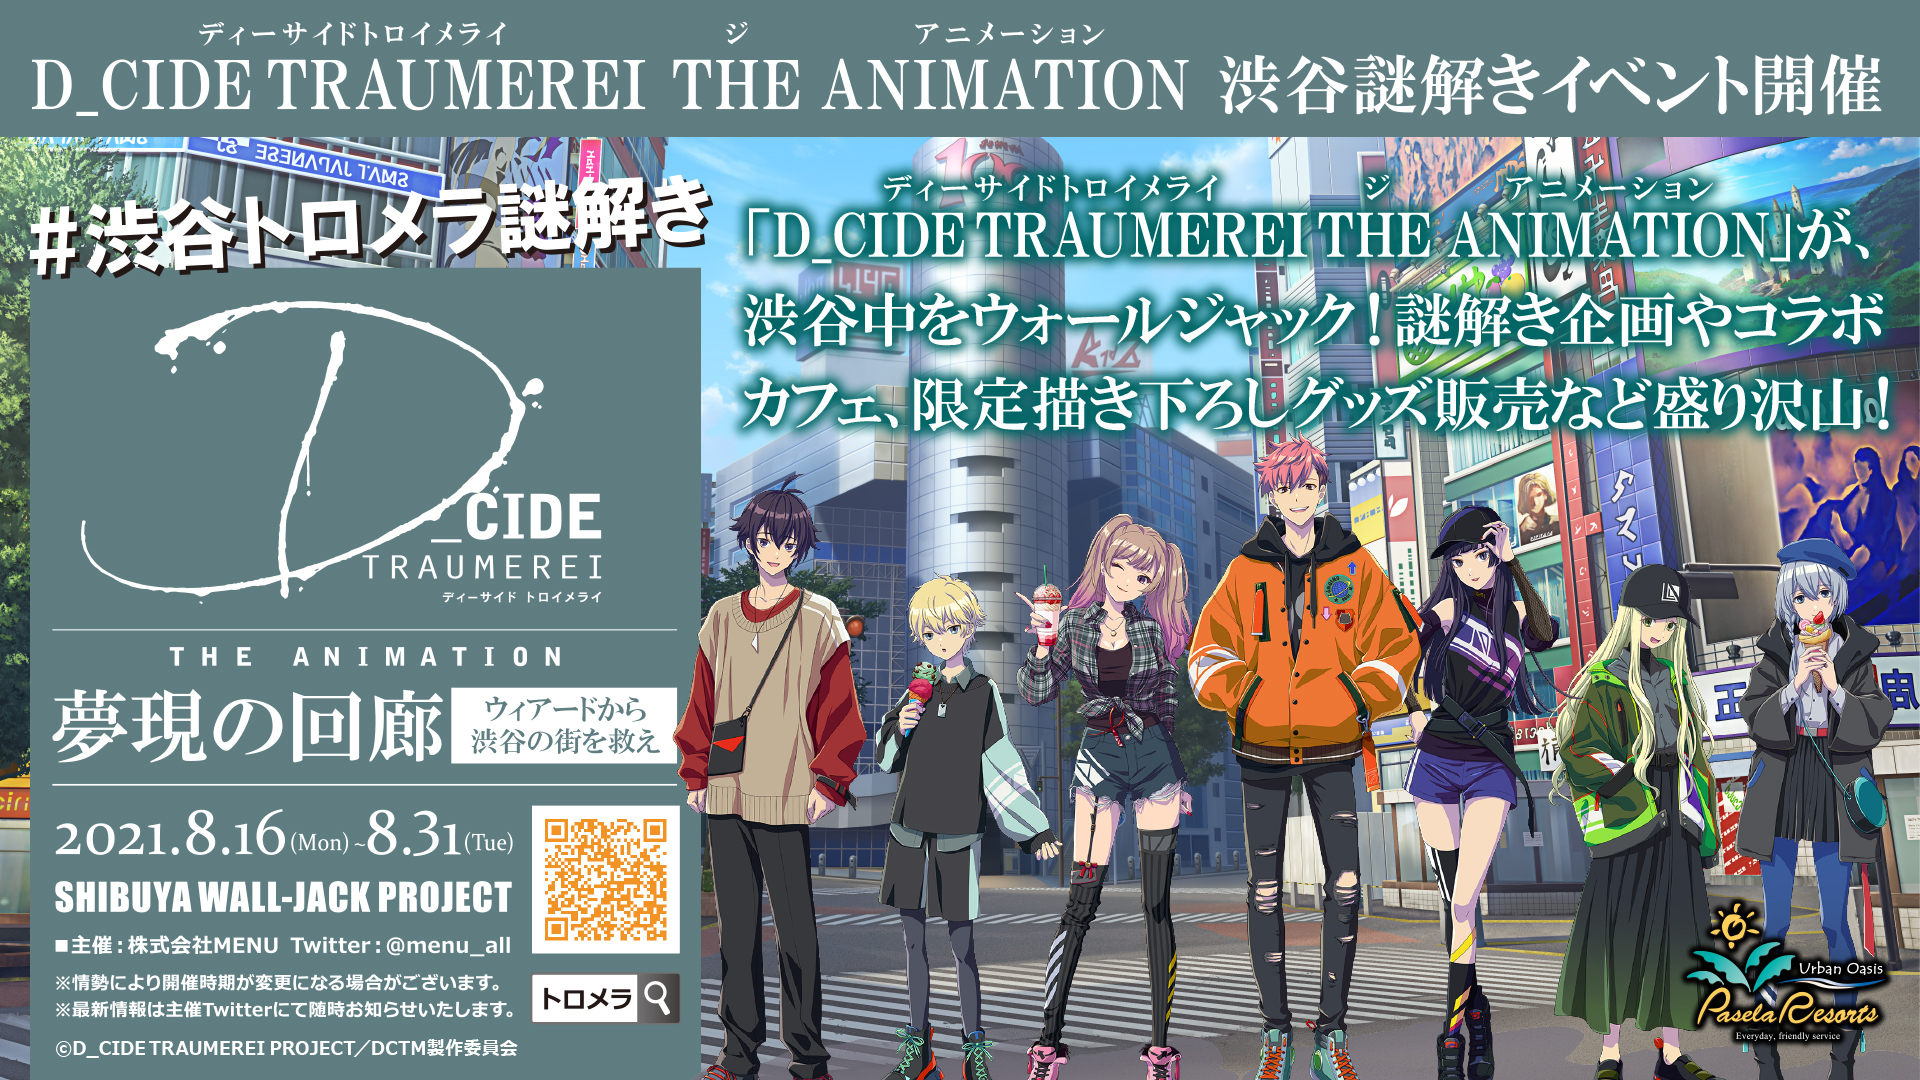 D_CIDE TRAUMEREI(ディーサイドトロイメライ)」渋谷謎解きイベント 